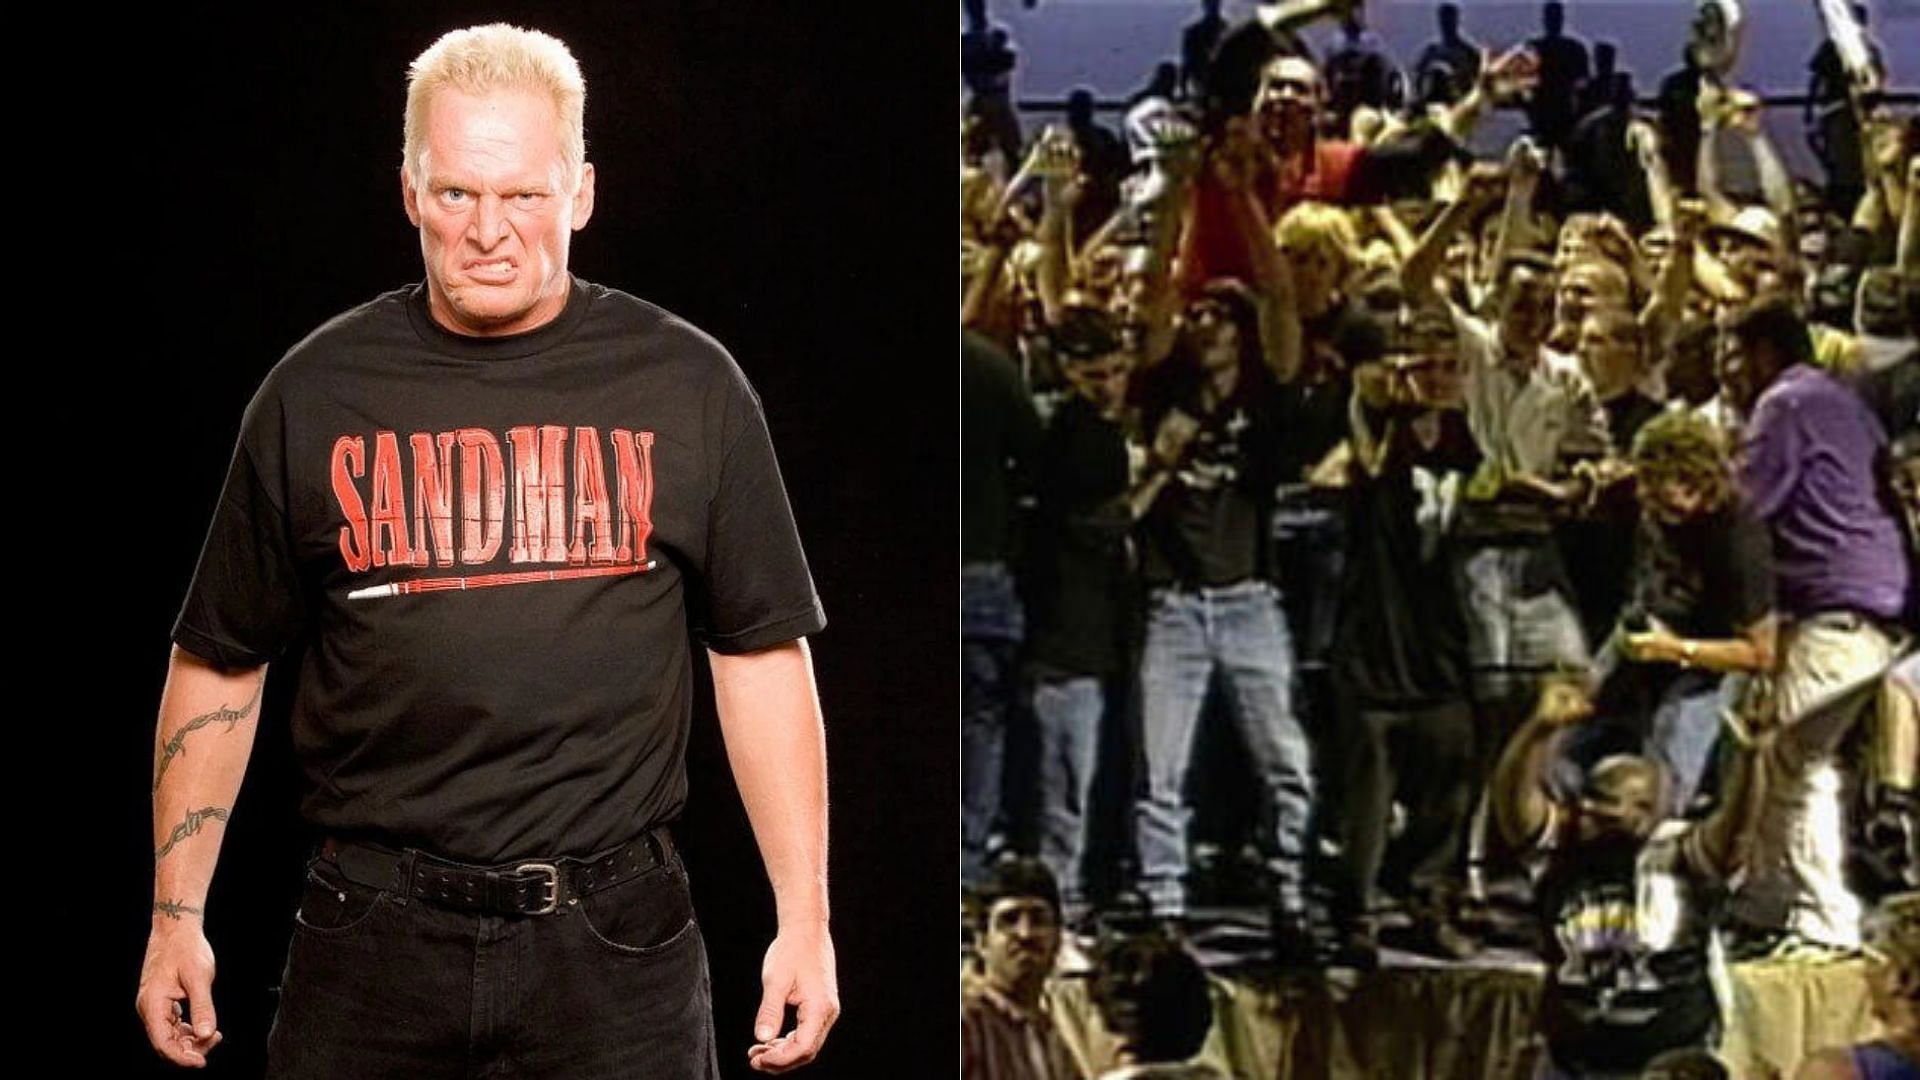 Five-time ECW World Heavyweight Champion The Sandman